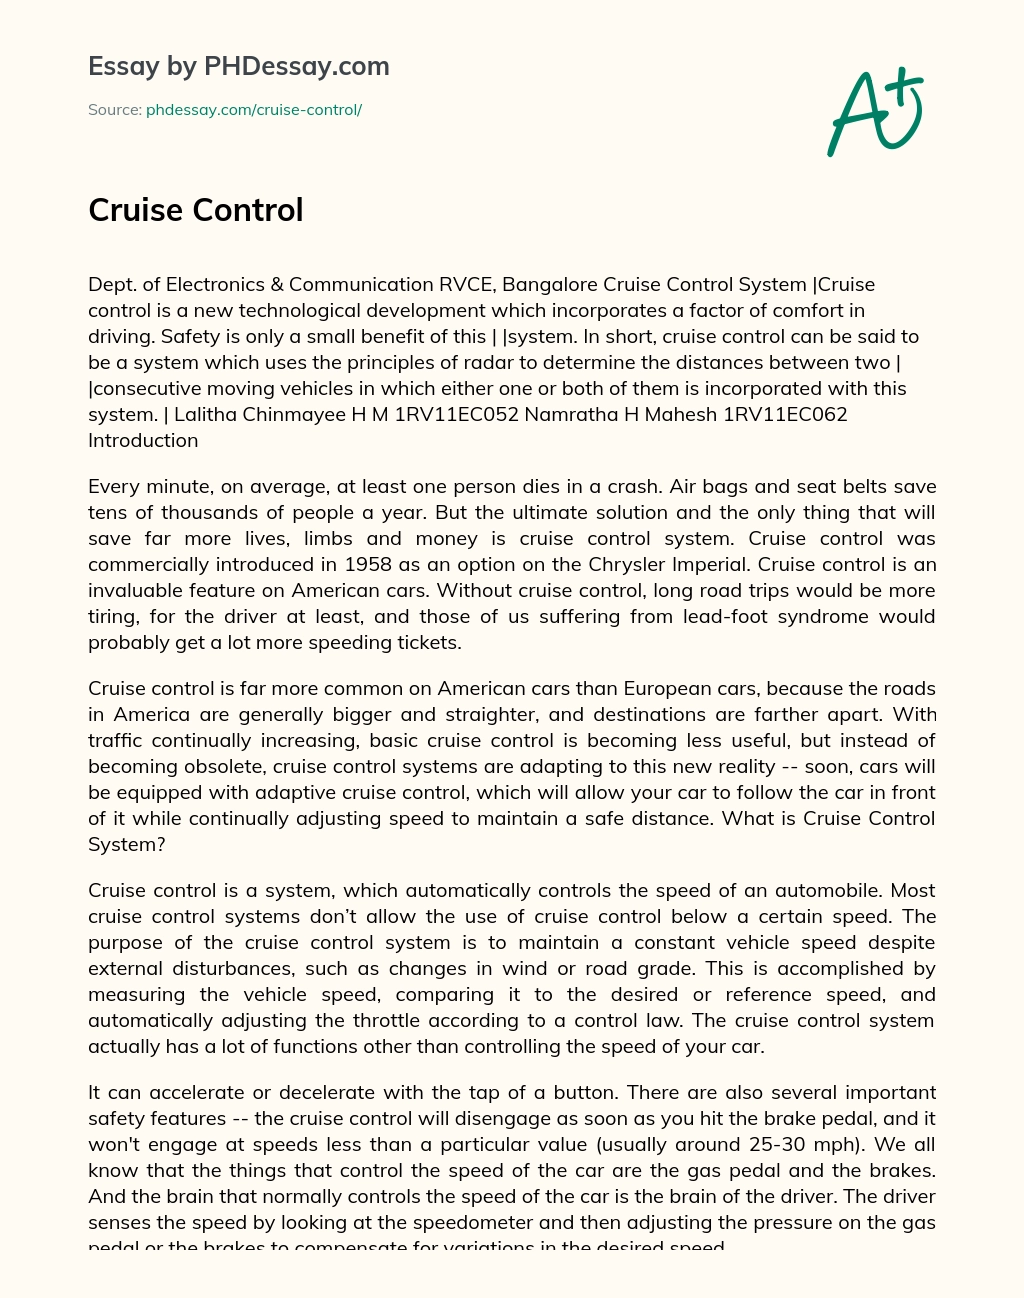 Cruise Control essay